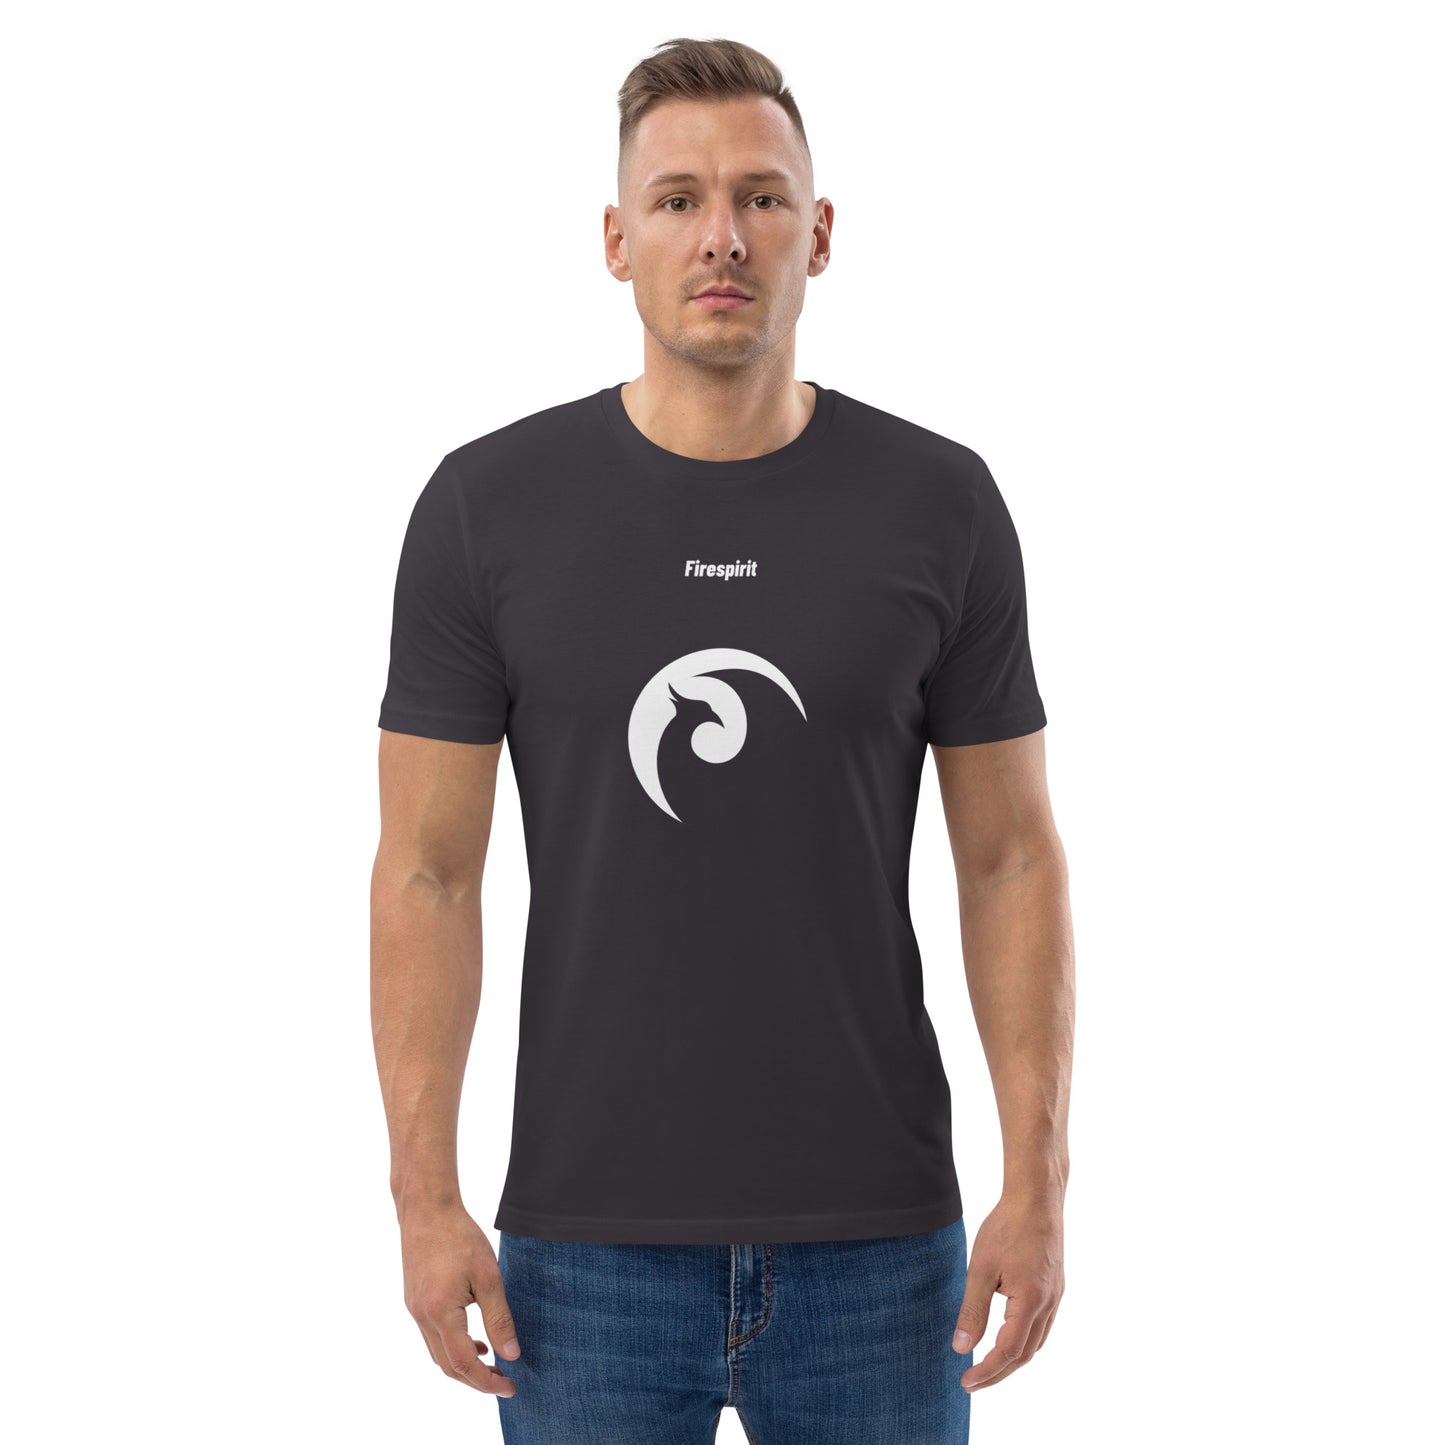 T-shirt Firespirit en coton biologique